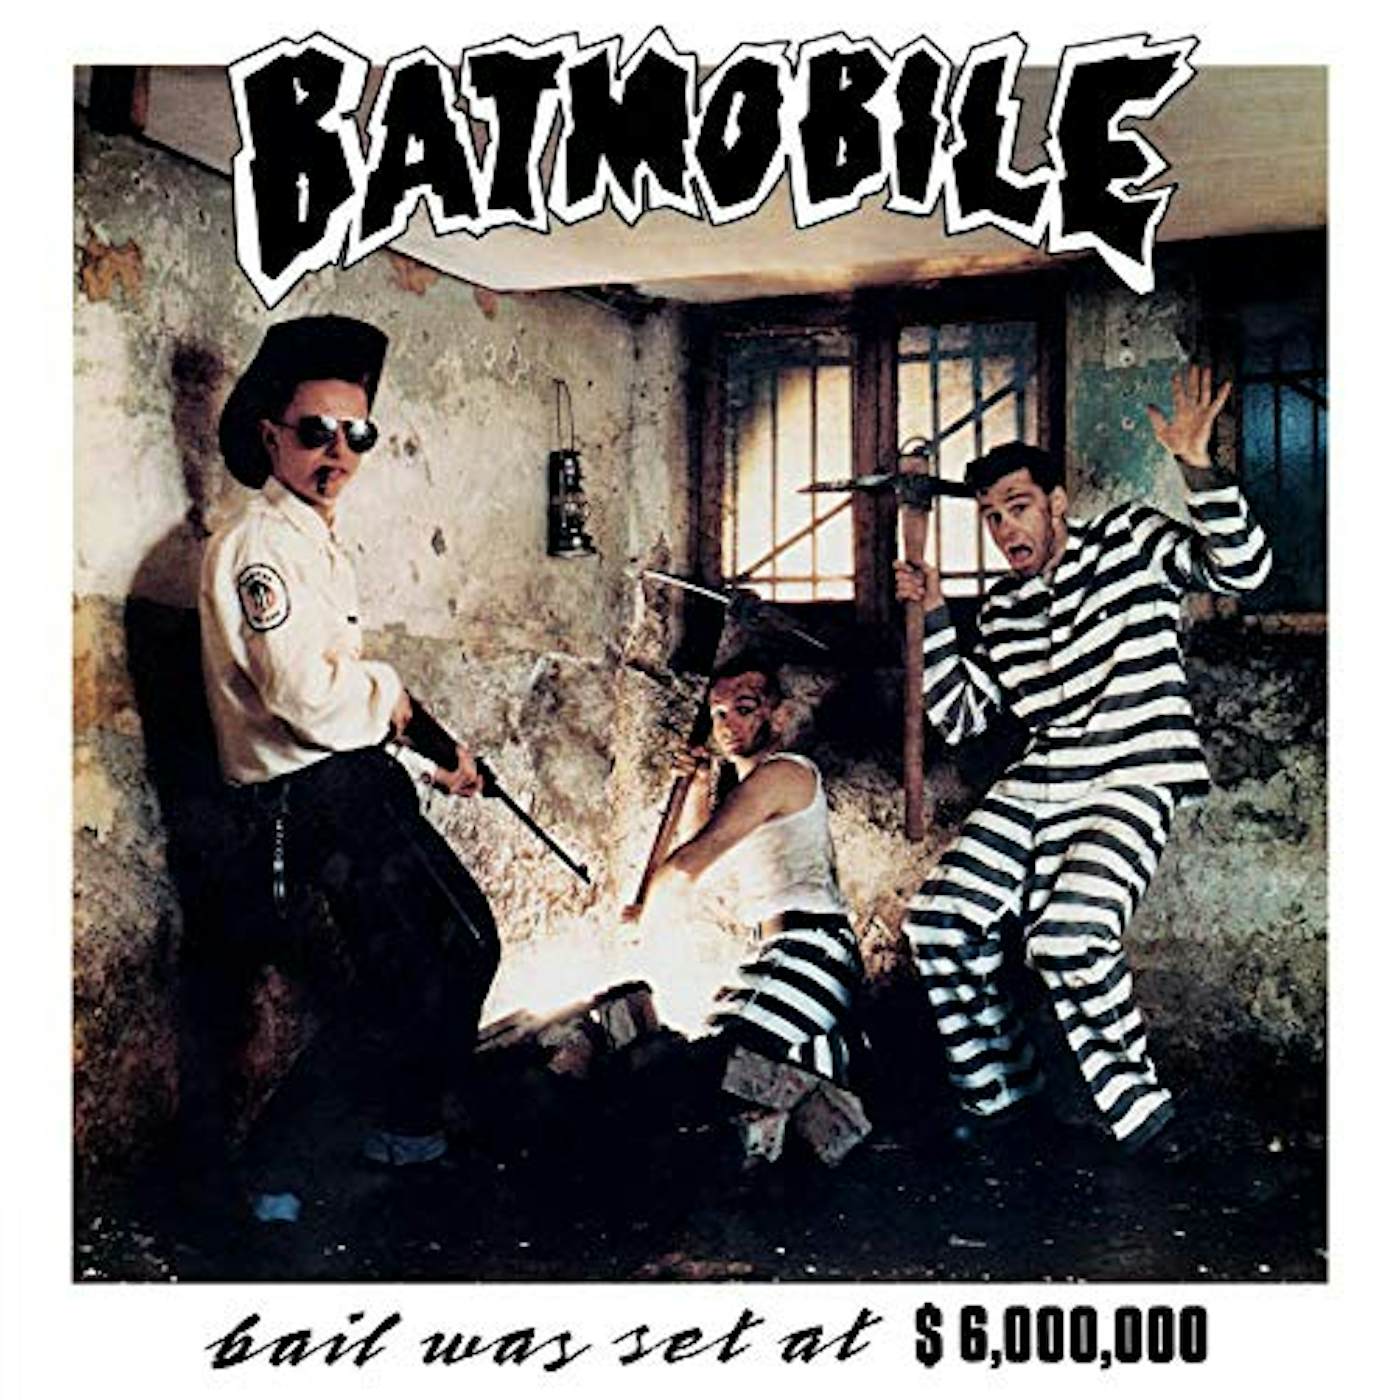 Batmobile Bail Was Set At $6,000,000 Vinyl Record